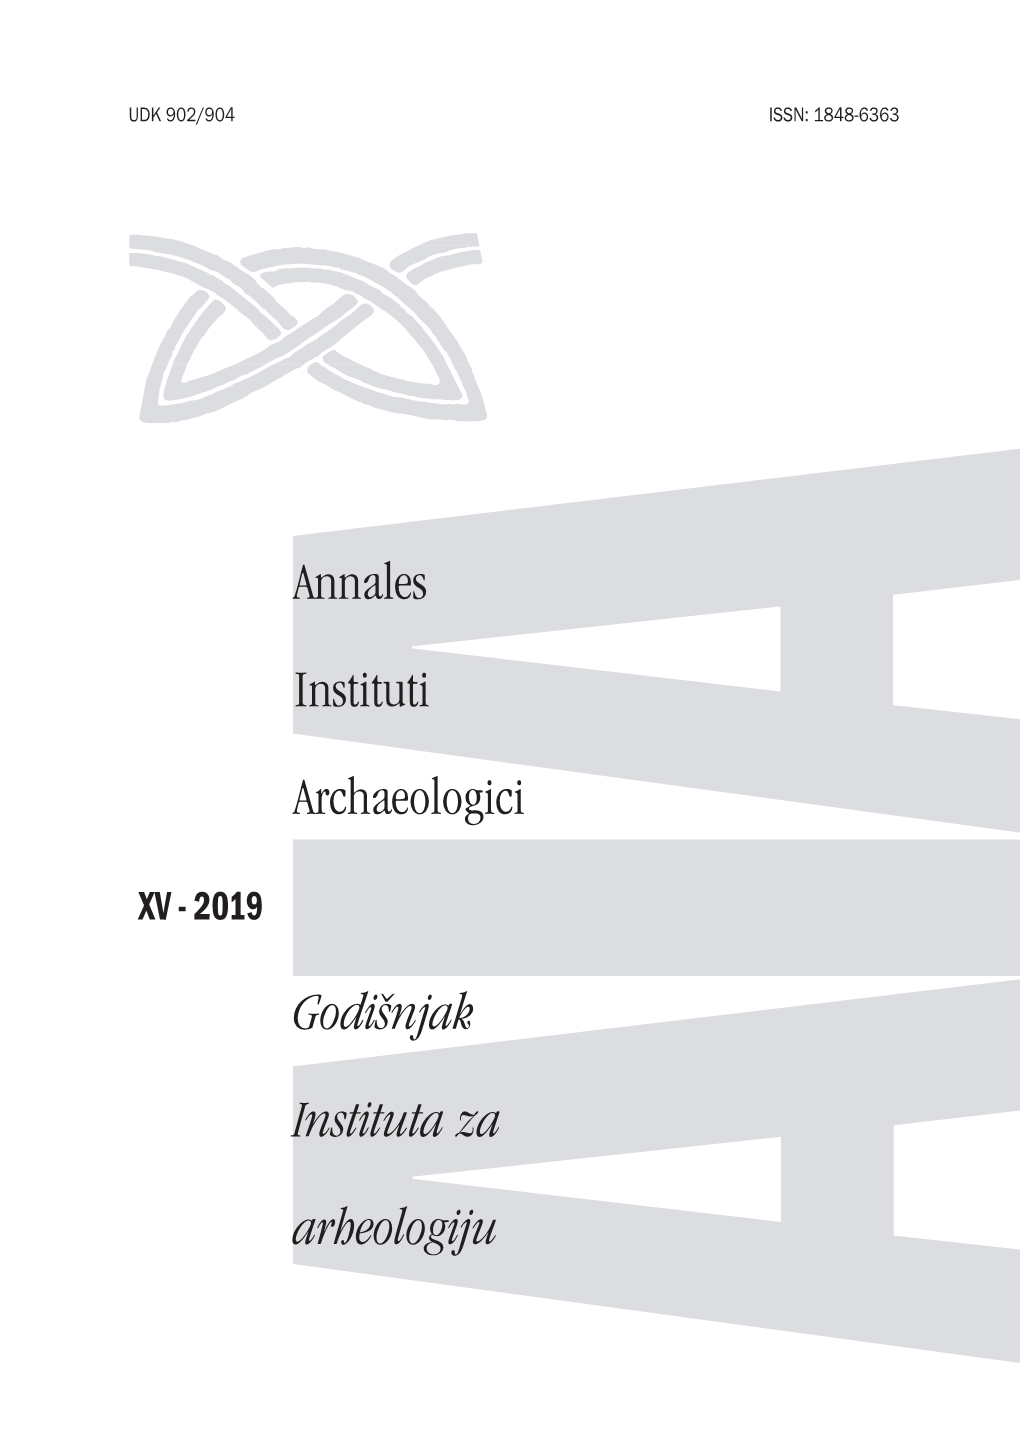 XV - 2019 Nakladnik/Publisher INSTITUT ZA ARHEOLOGIJU INSTITUTE of ARCHAEOLOGY